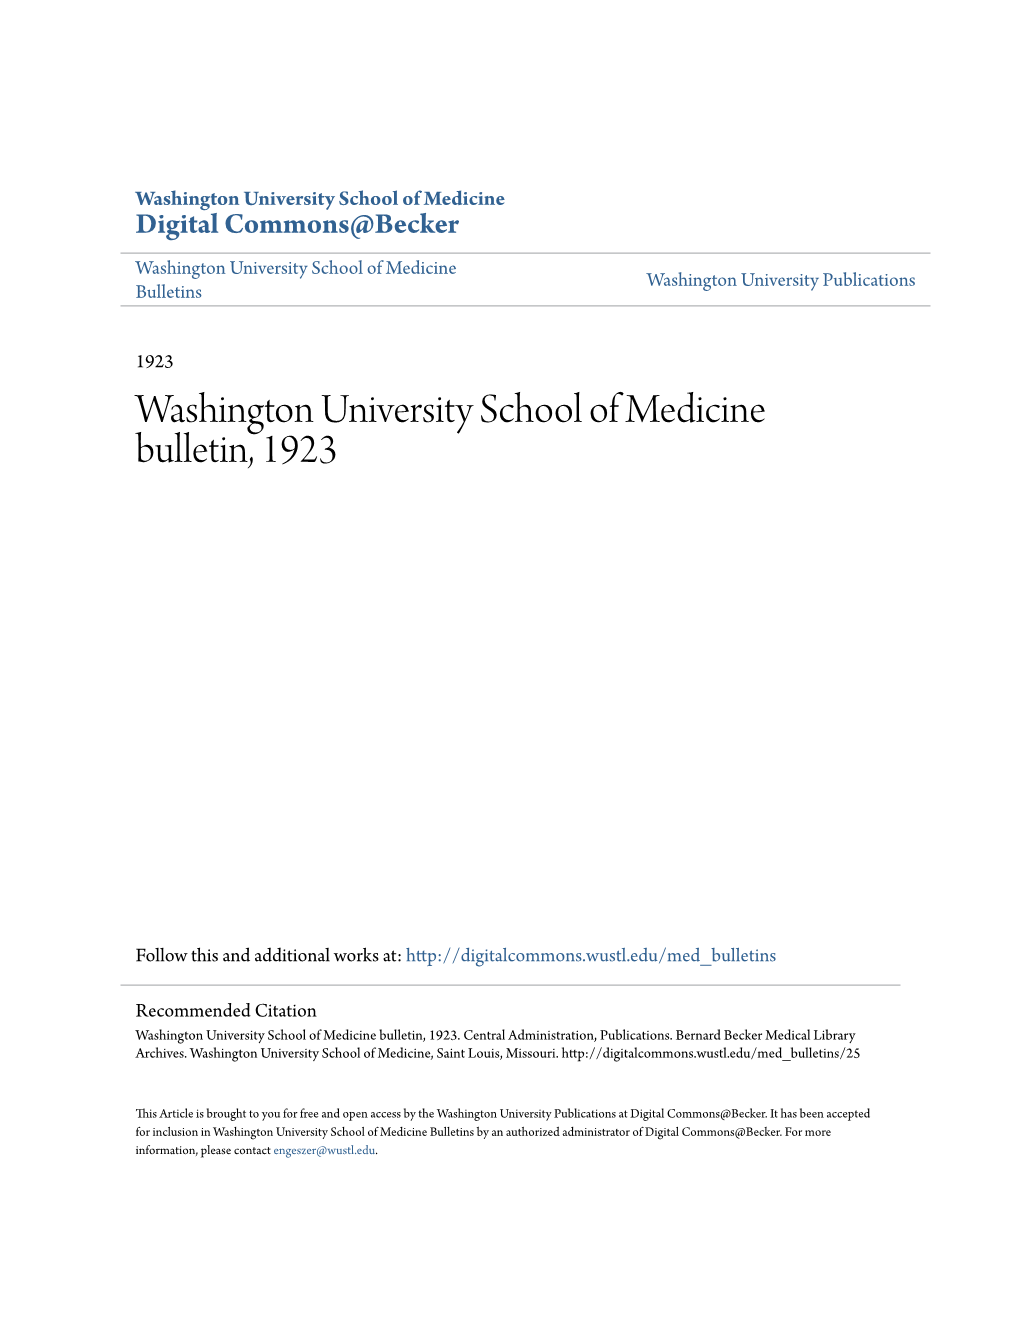 Washington University School of Medicine Bulletin, 1923